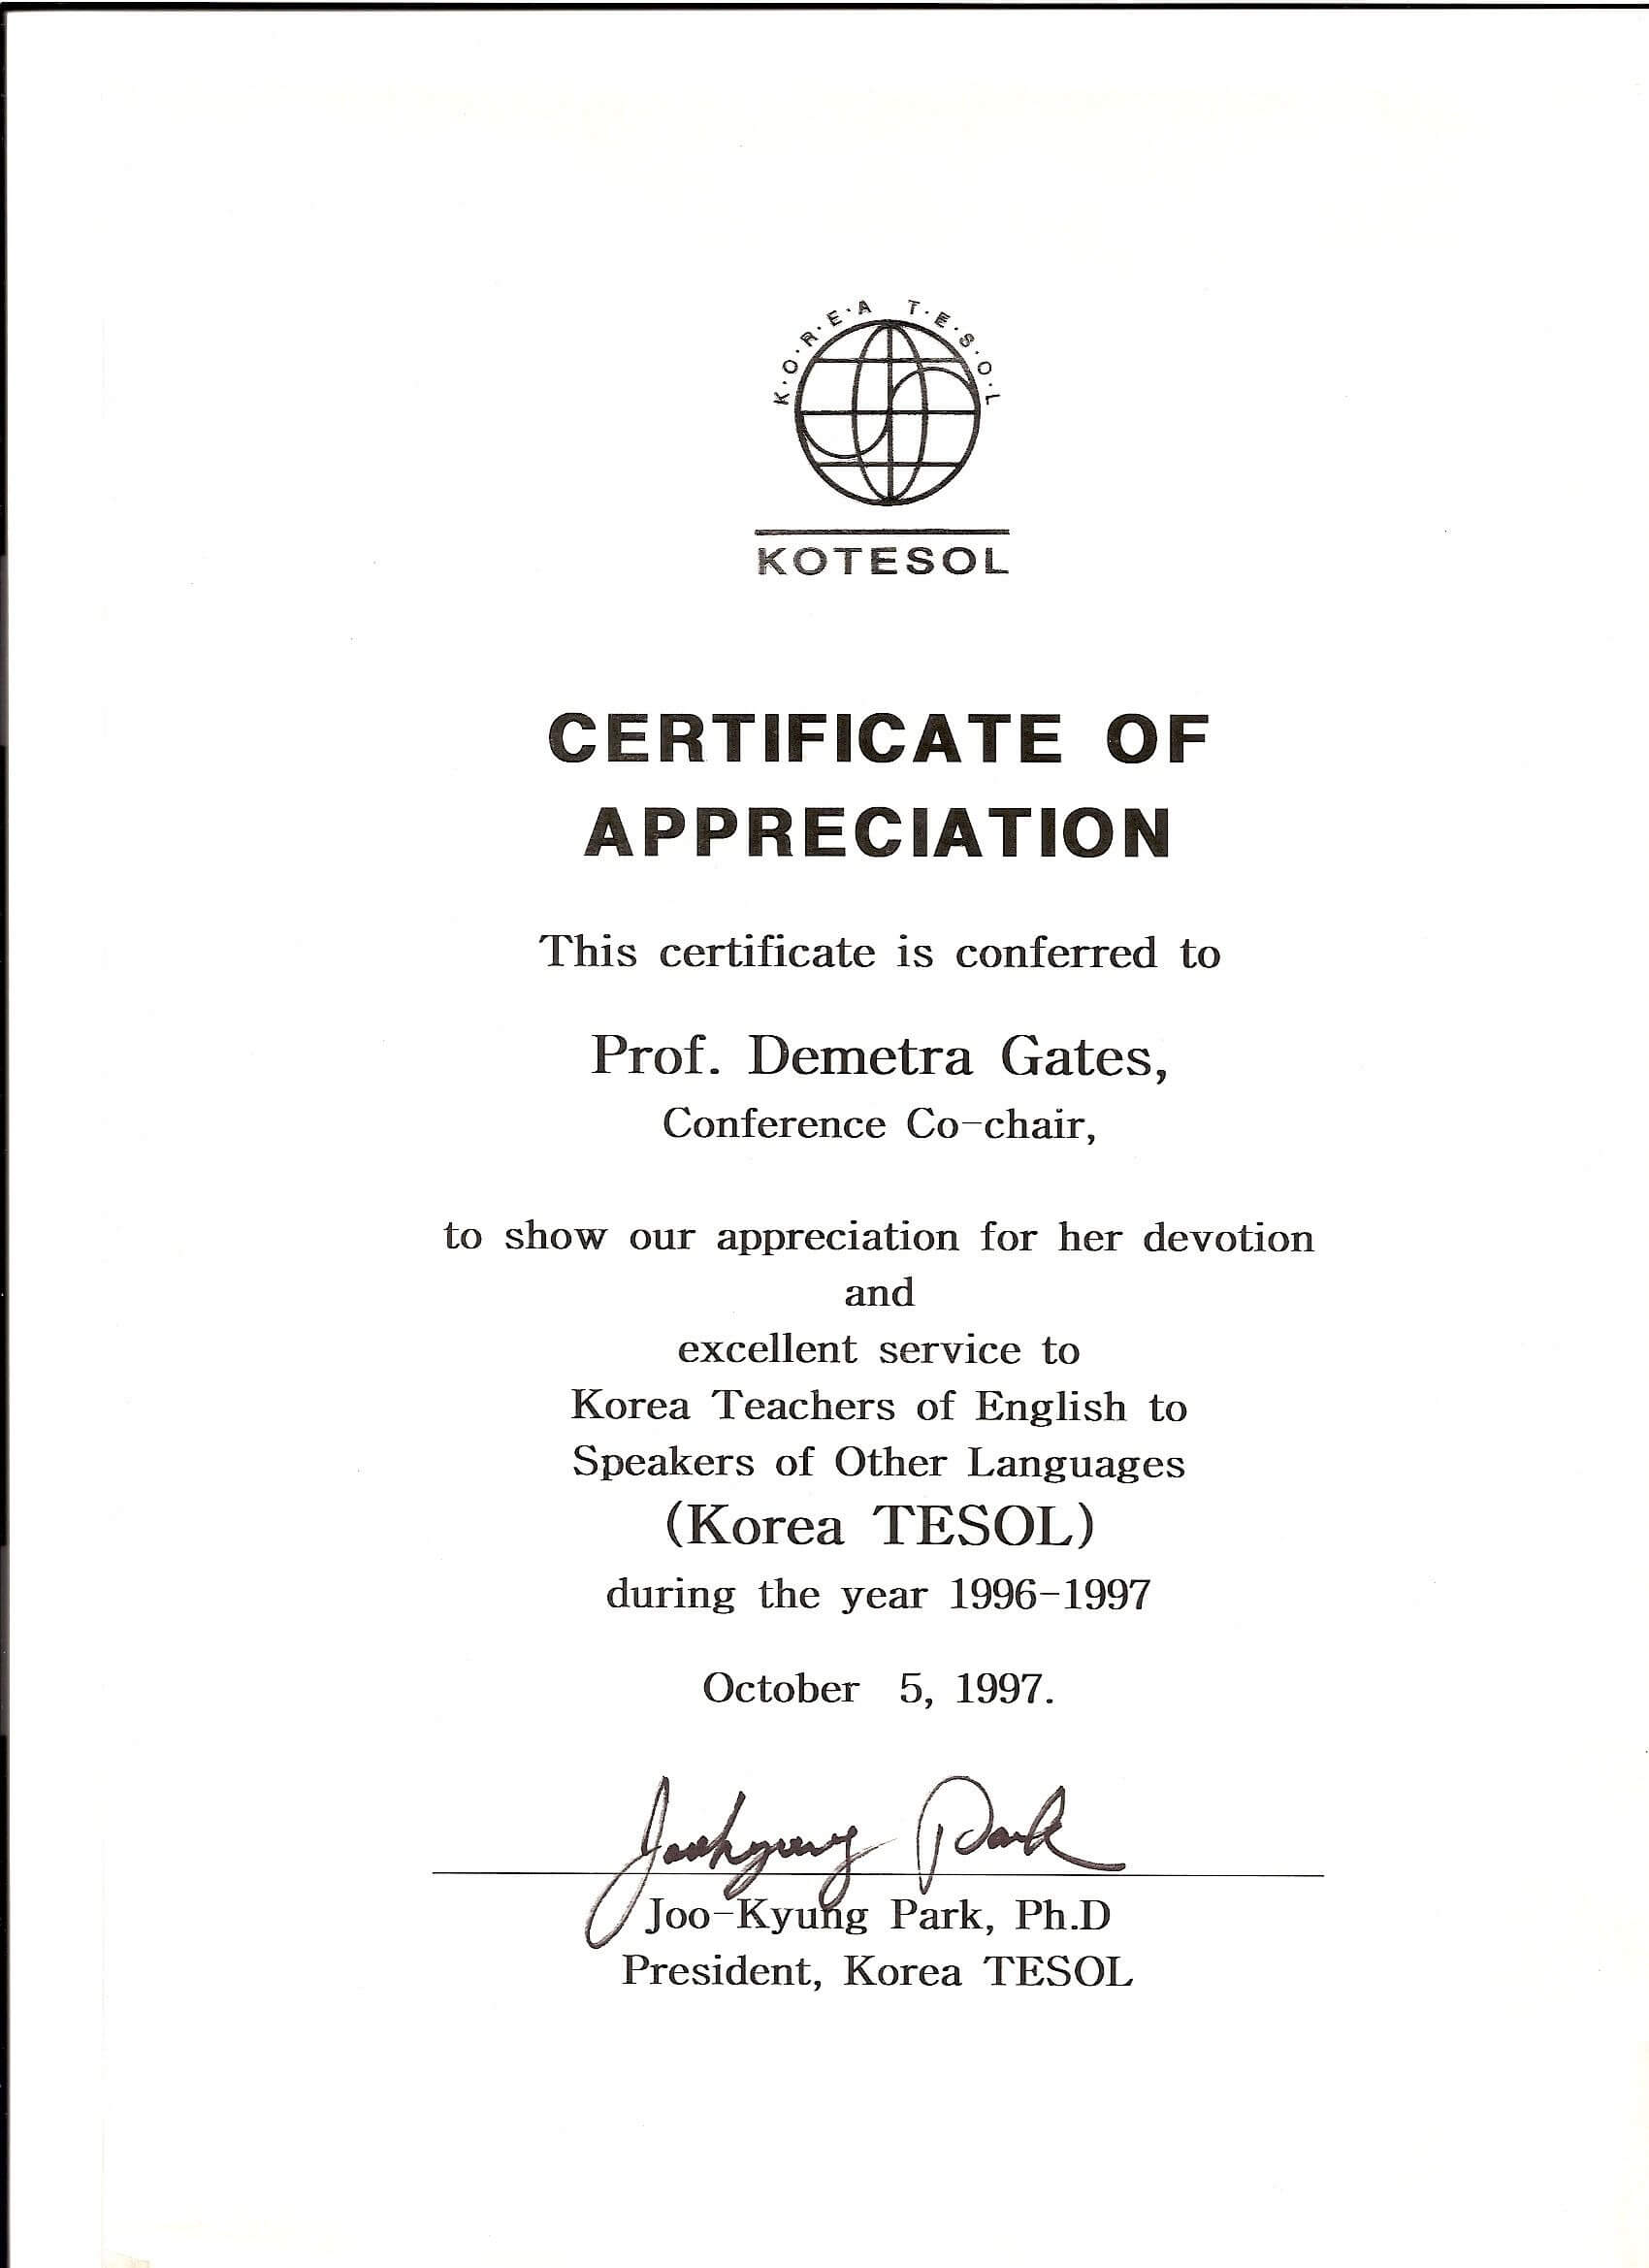 Kotesol Presidential Certificate Of Appreciation (1997 Throughout Army Certificate Of Appreciation Template